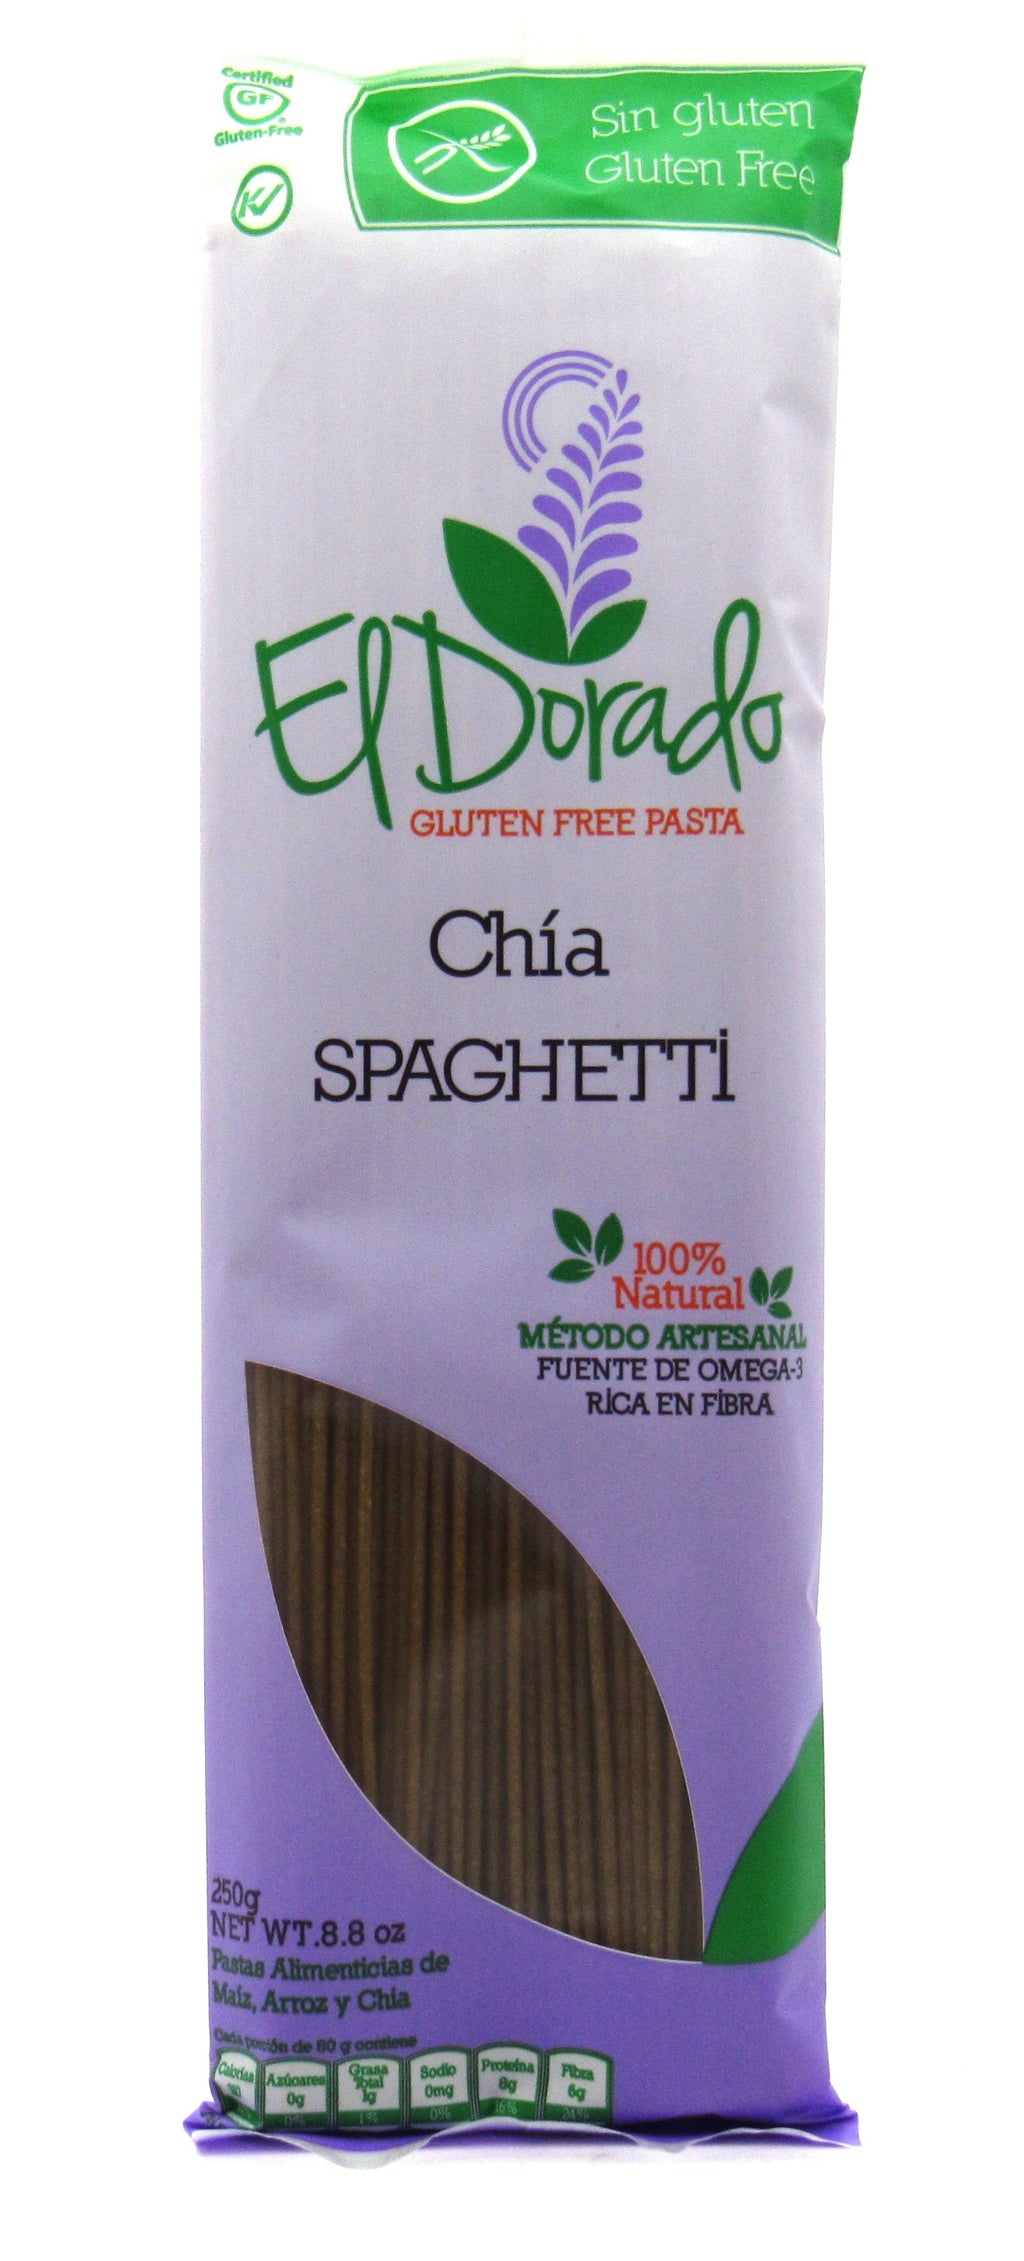 Spaghetti 250gr (EL DORADO) Chía